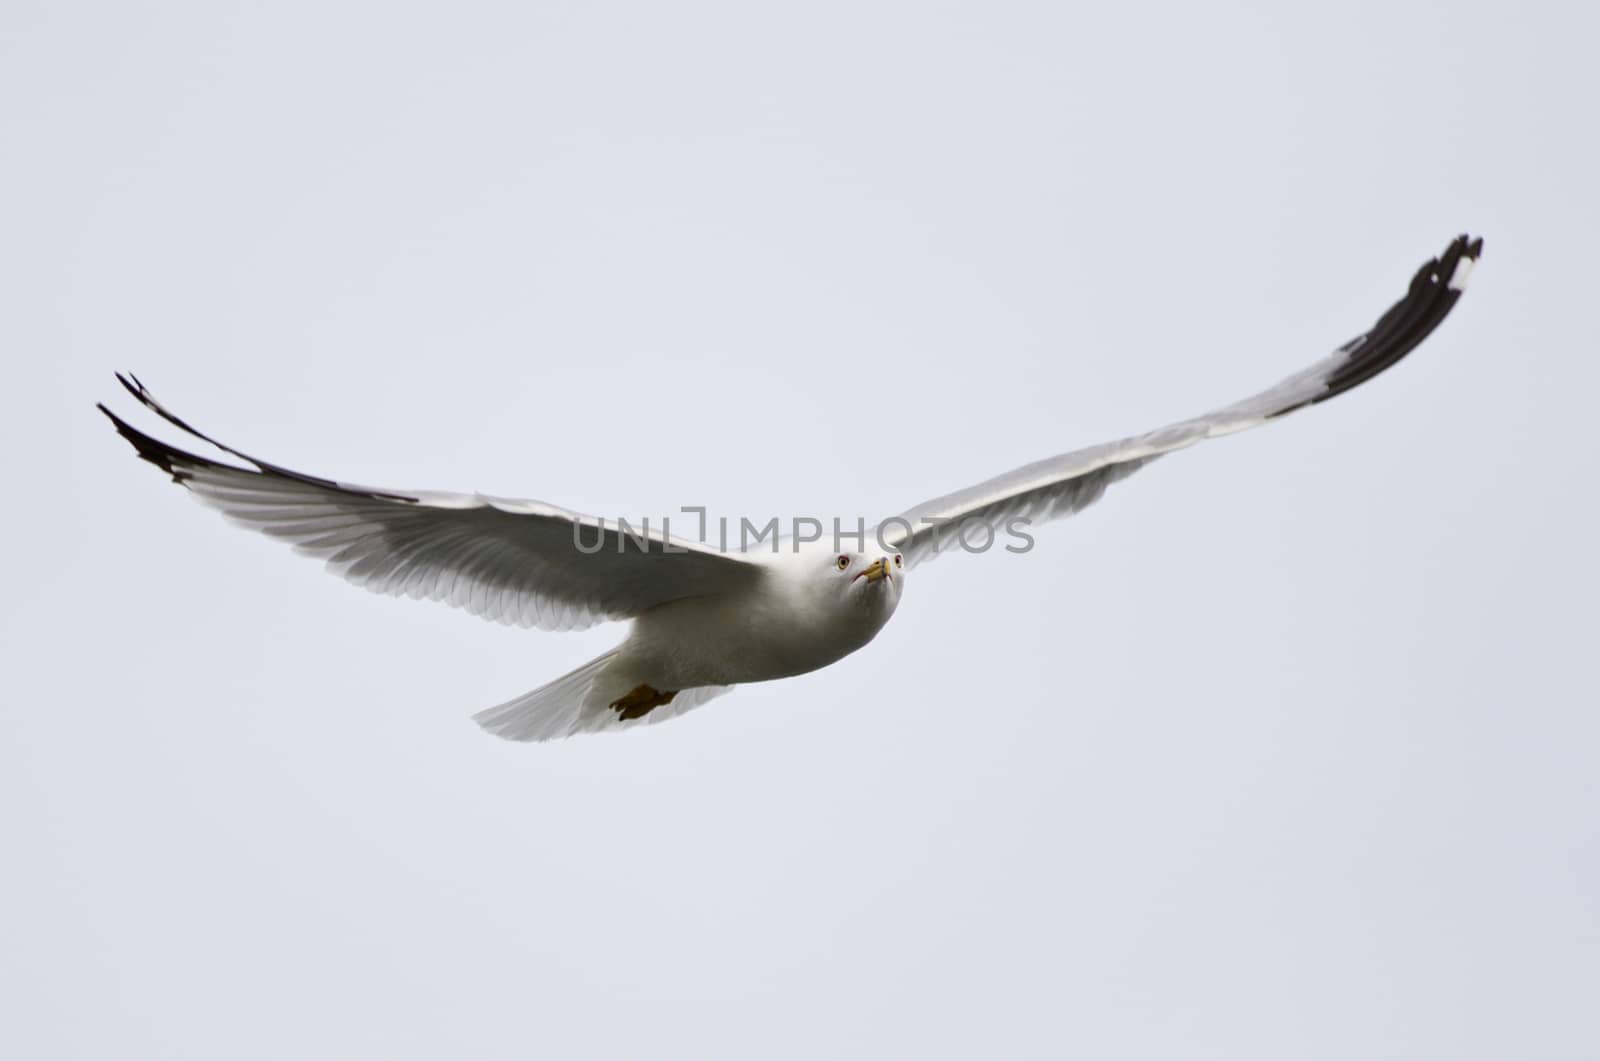 The gull in flight in the sky